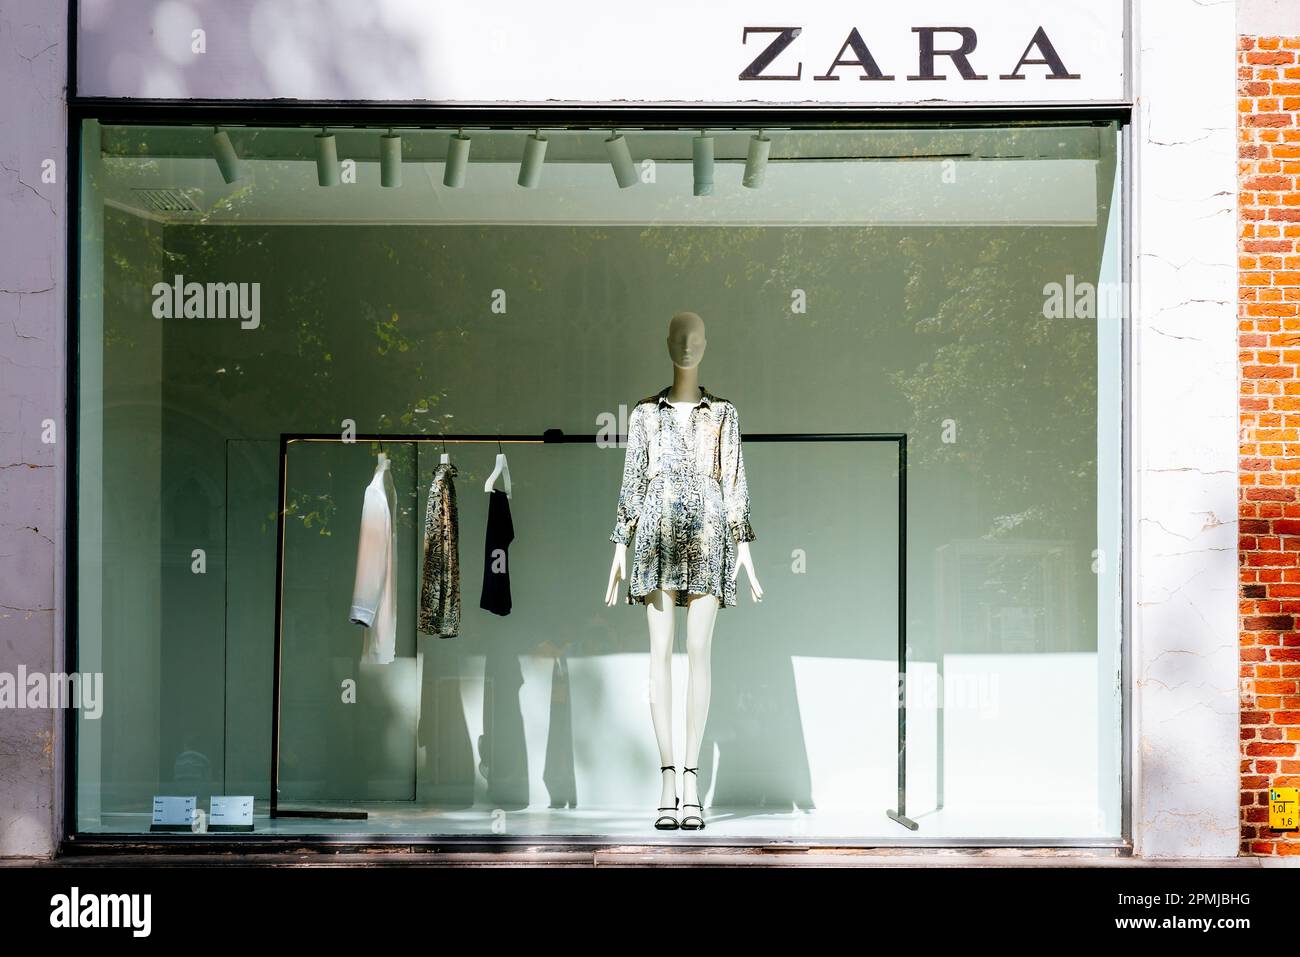 Présentation d'un magasin ZARA. Bruges, Flandre Occidentale, Belgique, Europe Banque D'Images